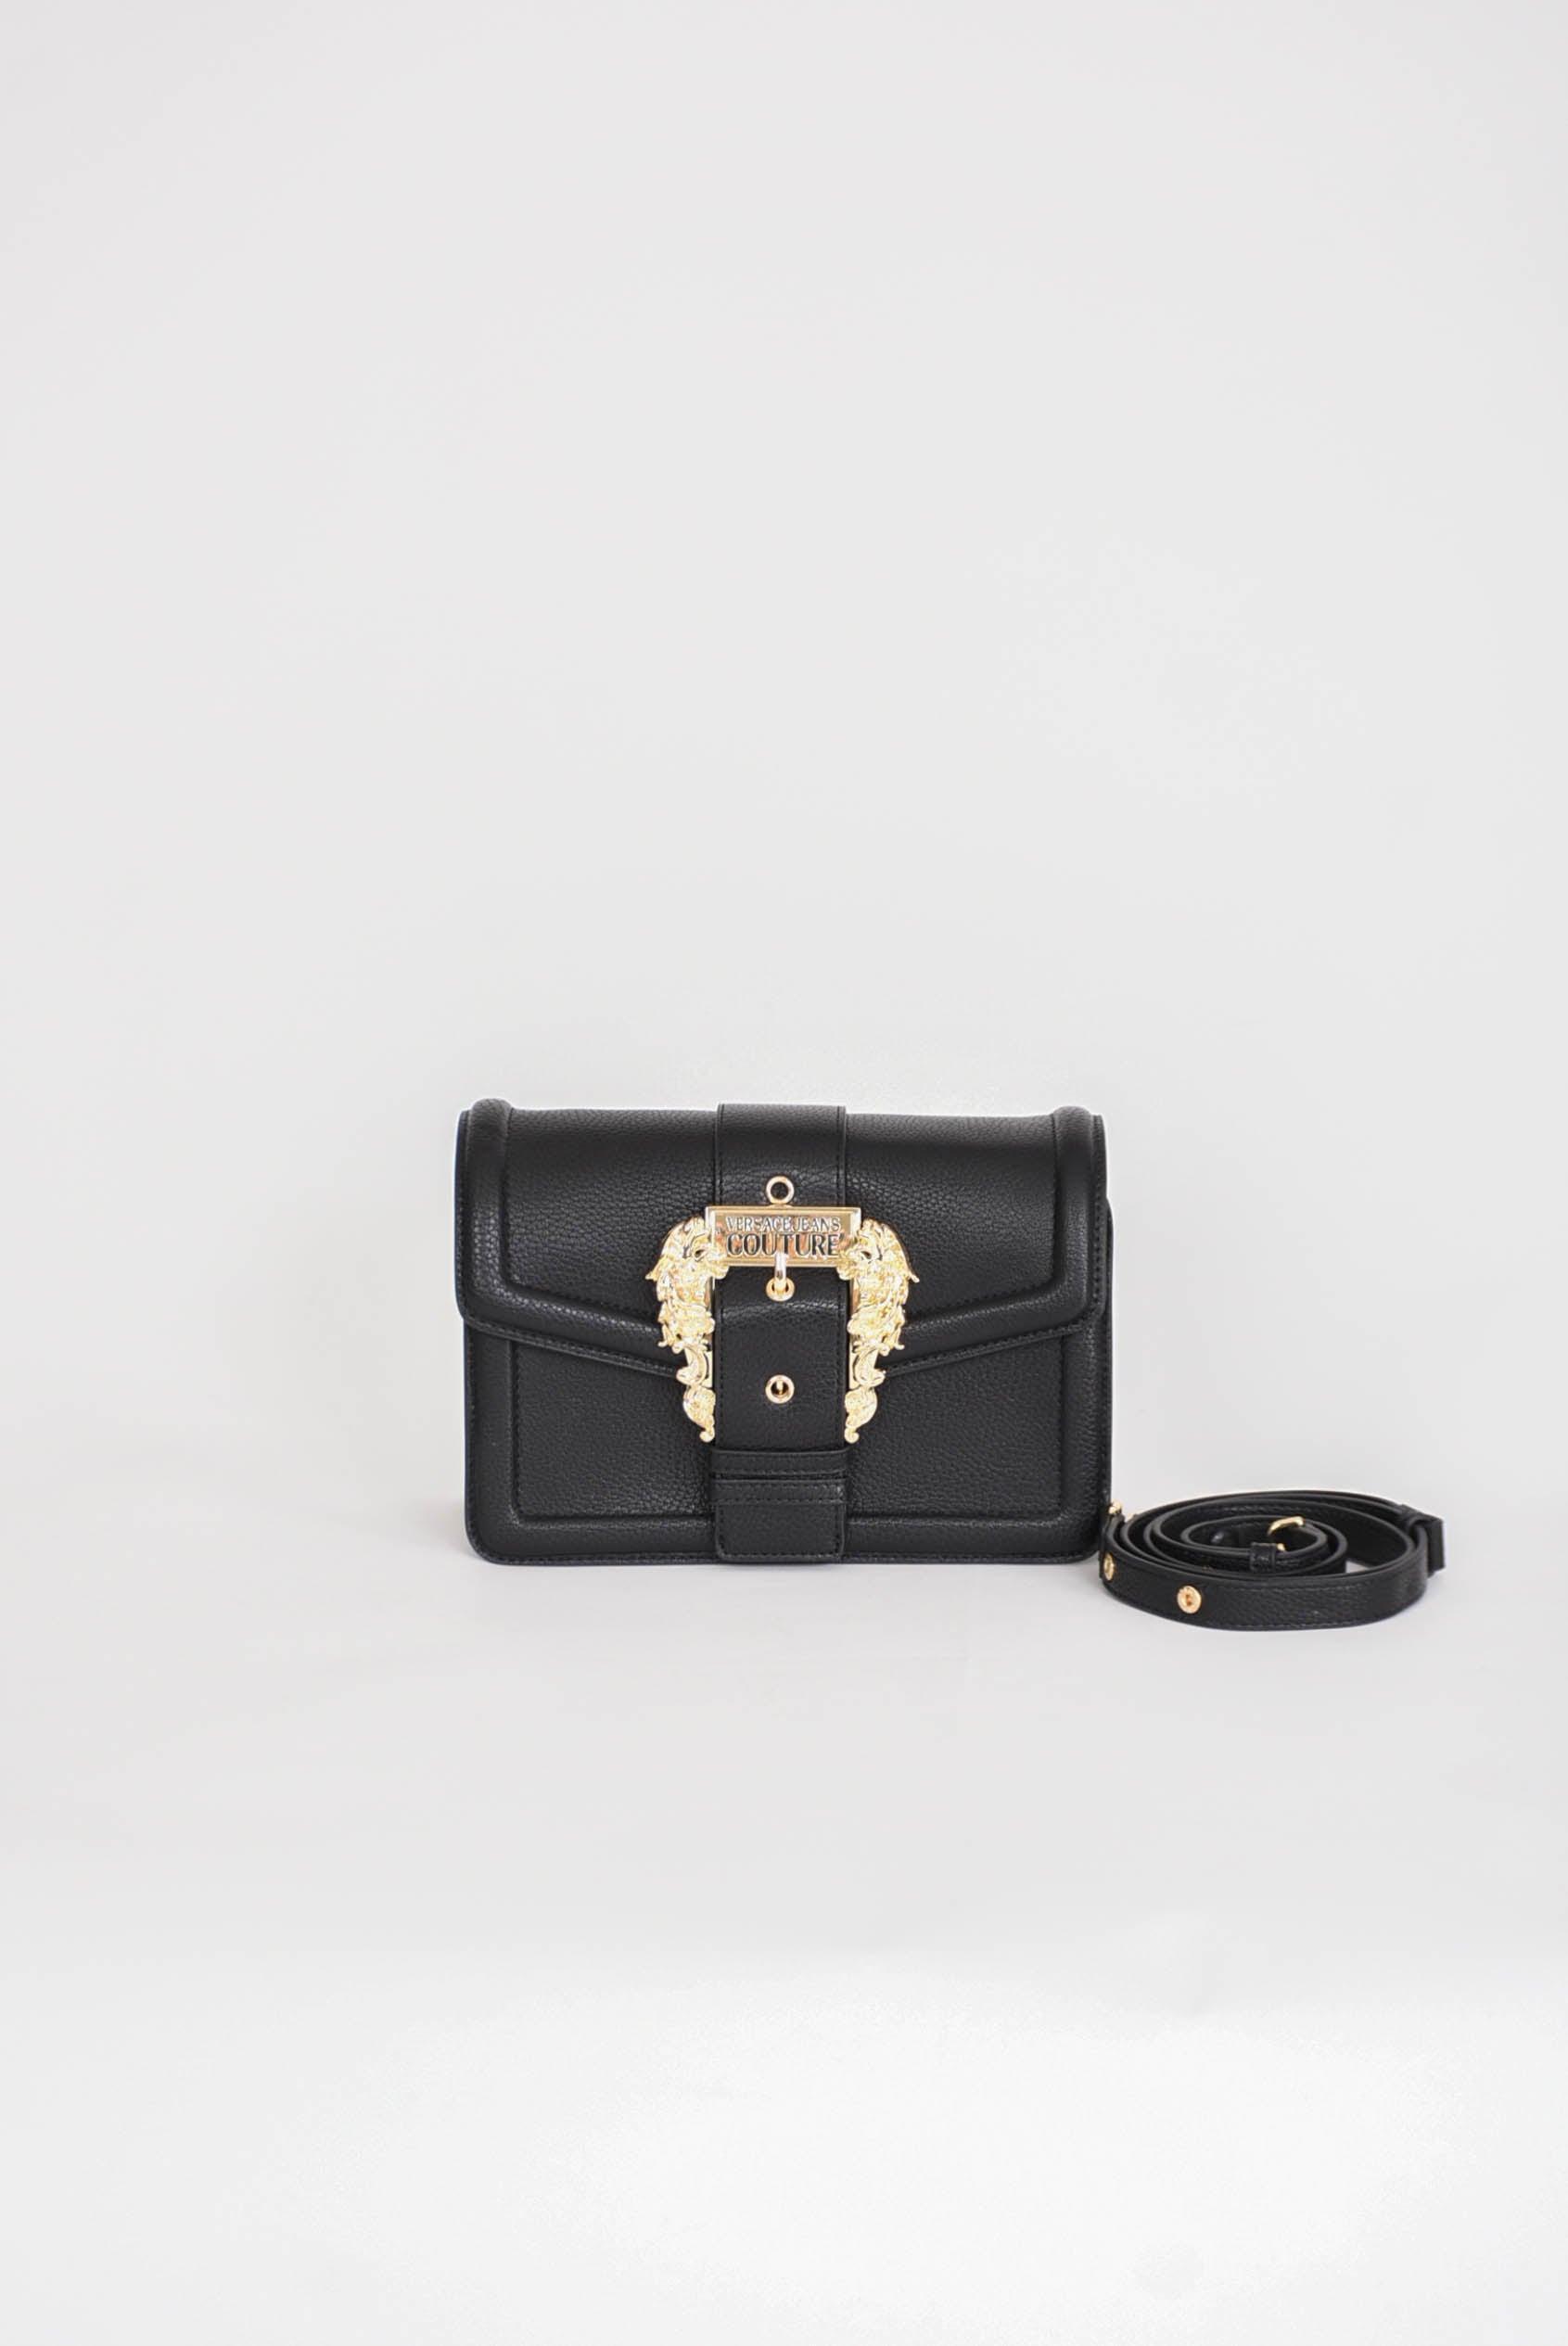 Versace Jeans Couture Shoulder Bag in Black | Lyst